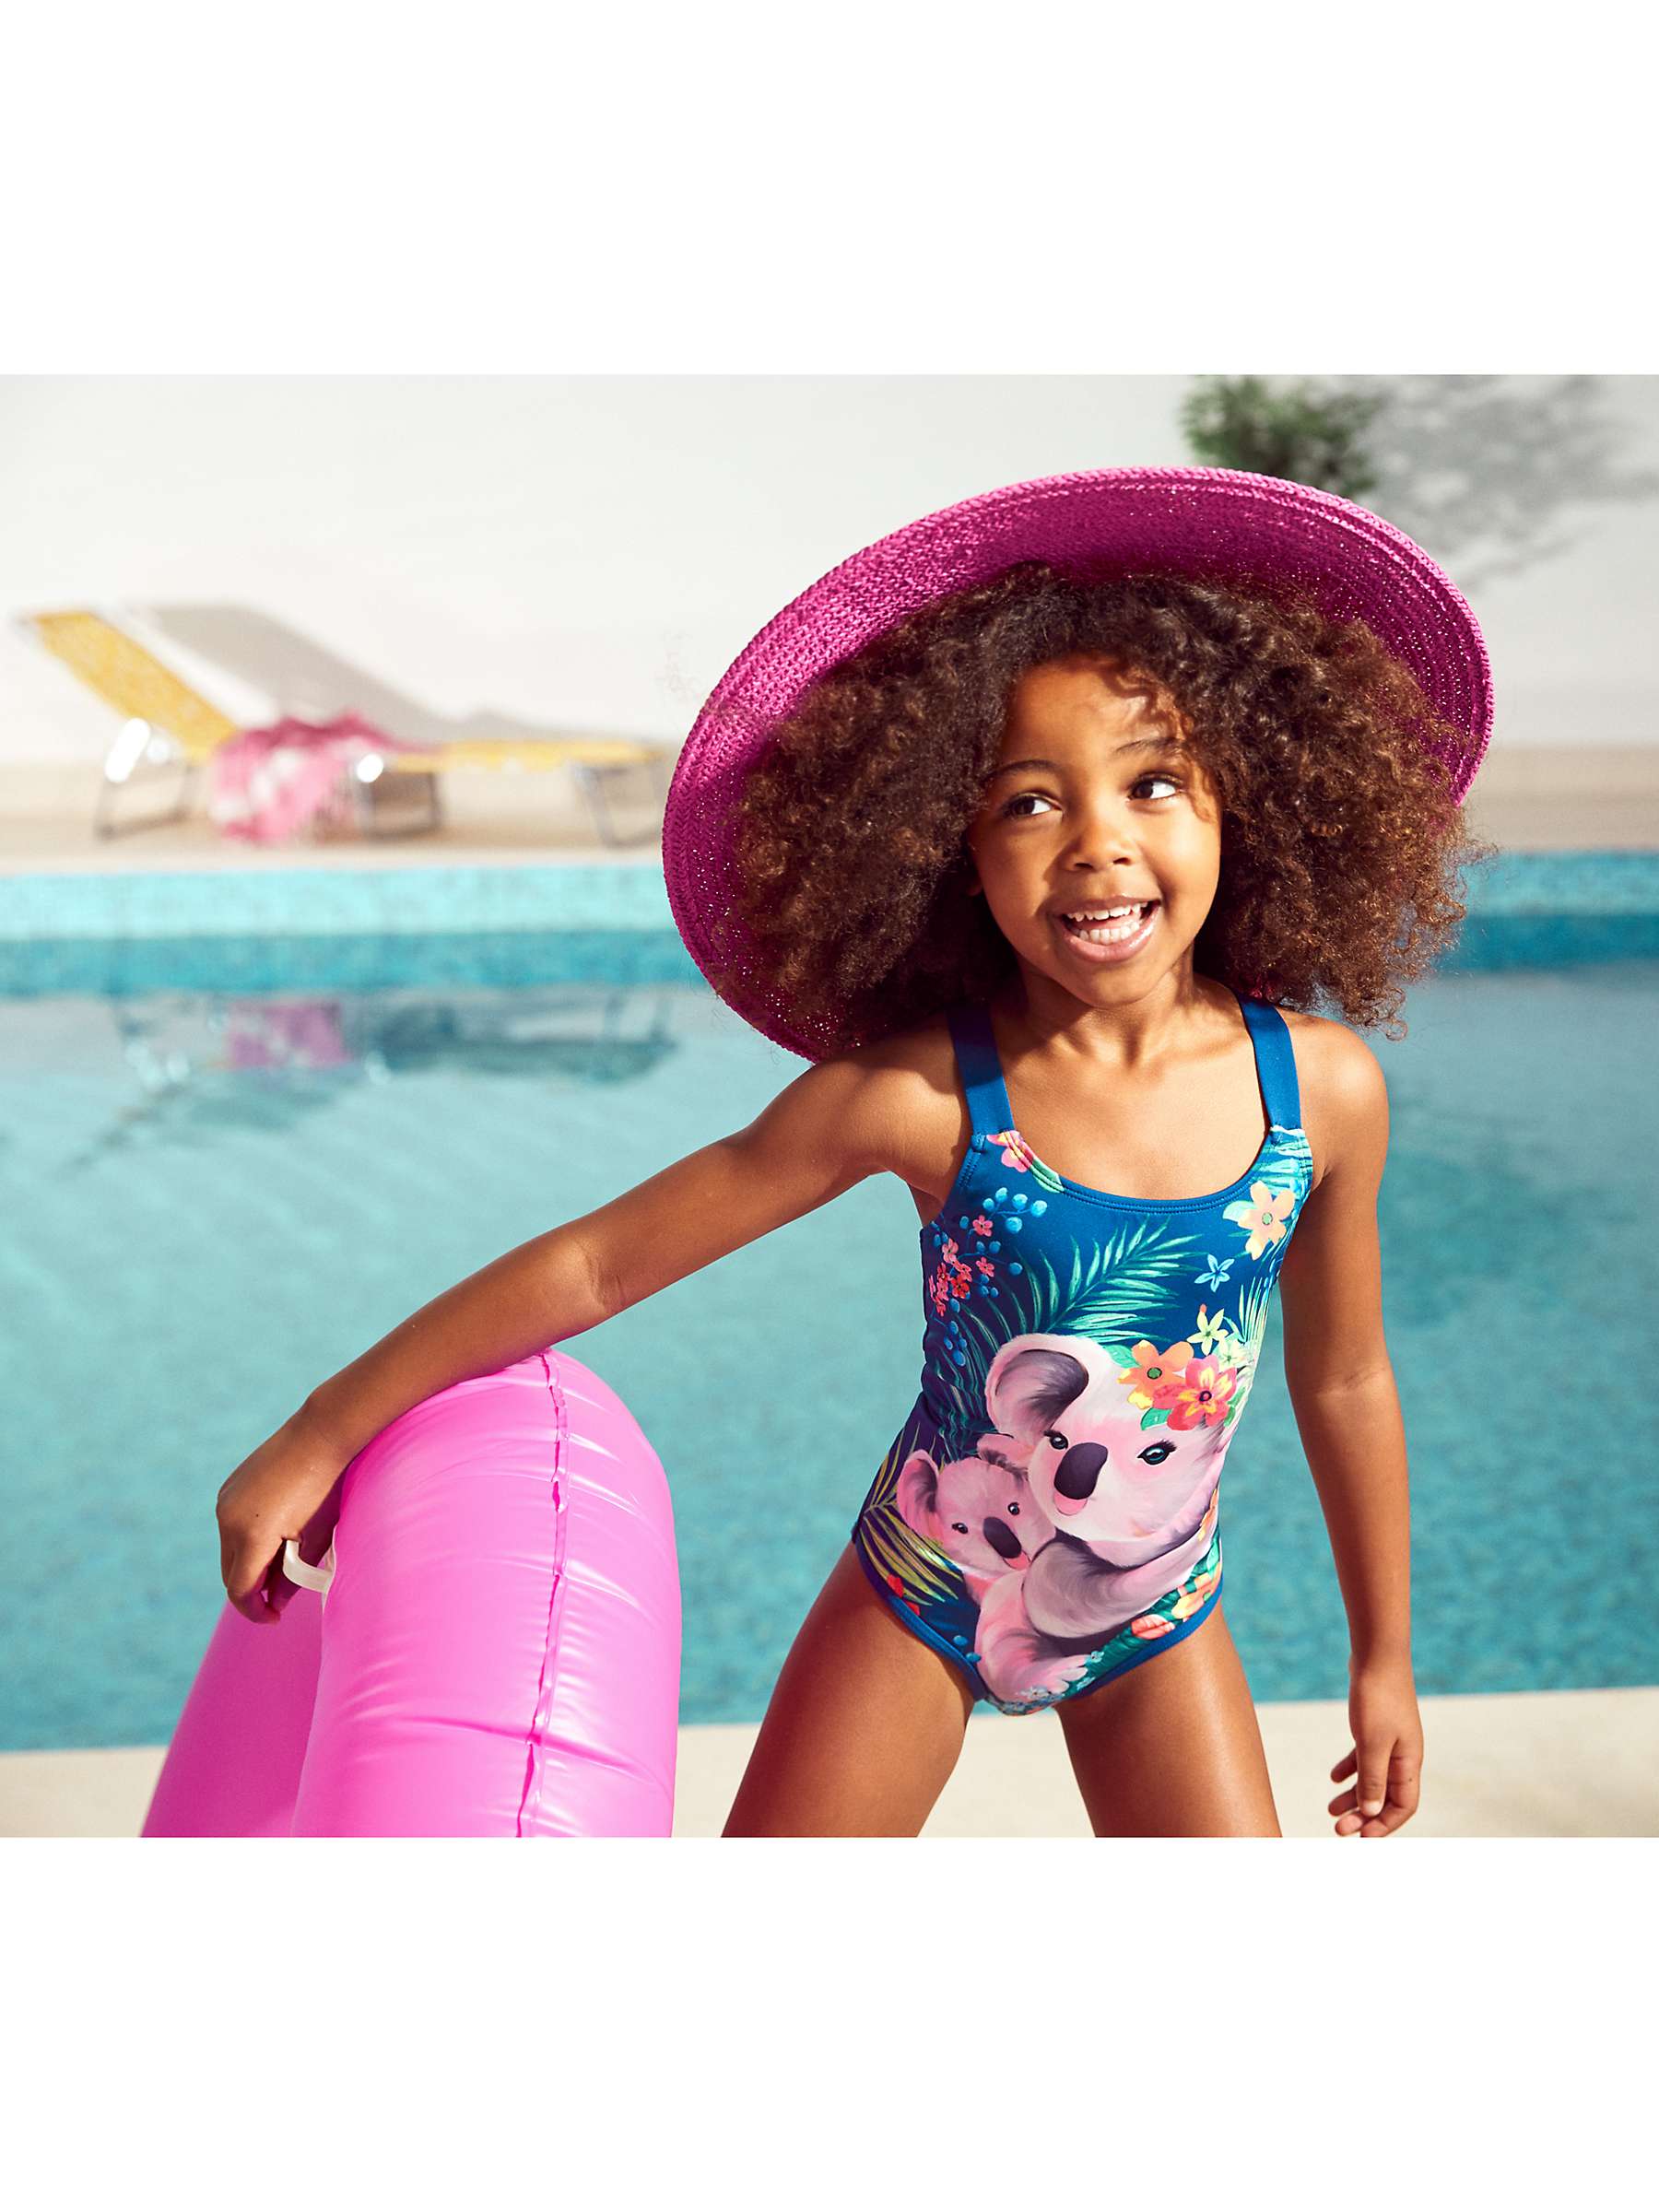 Buy Monsoon Kids' Koala Graphic Swimsuit, Navy Online at johnlewis.com